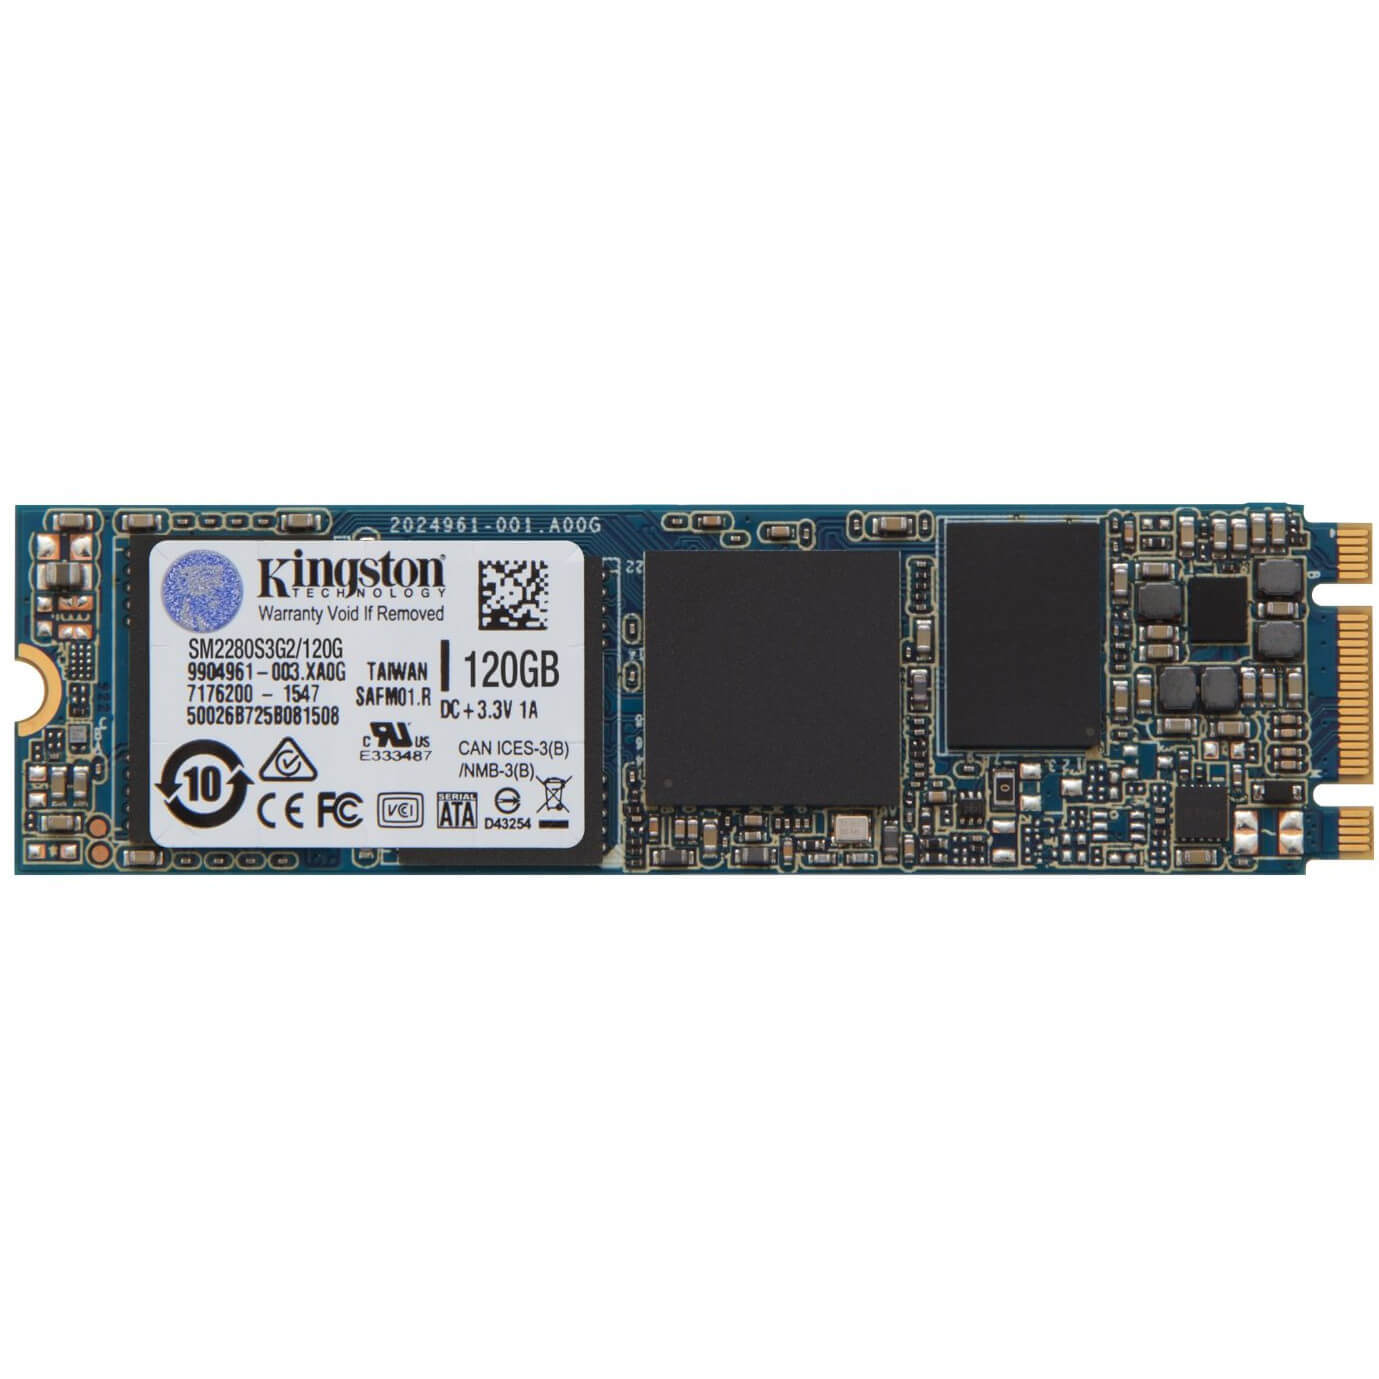  SSD Kingston SM2280S3G2, 120GB, SATA III 